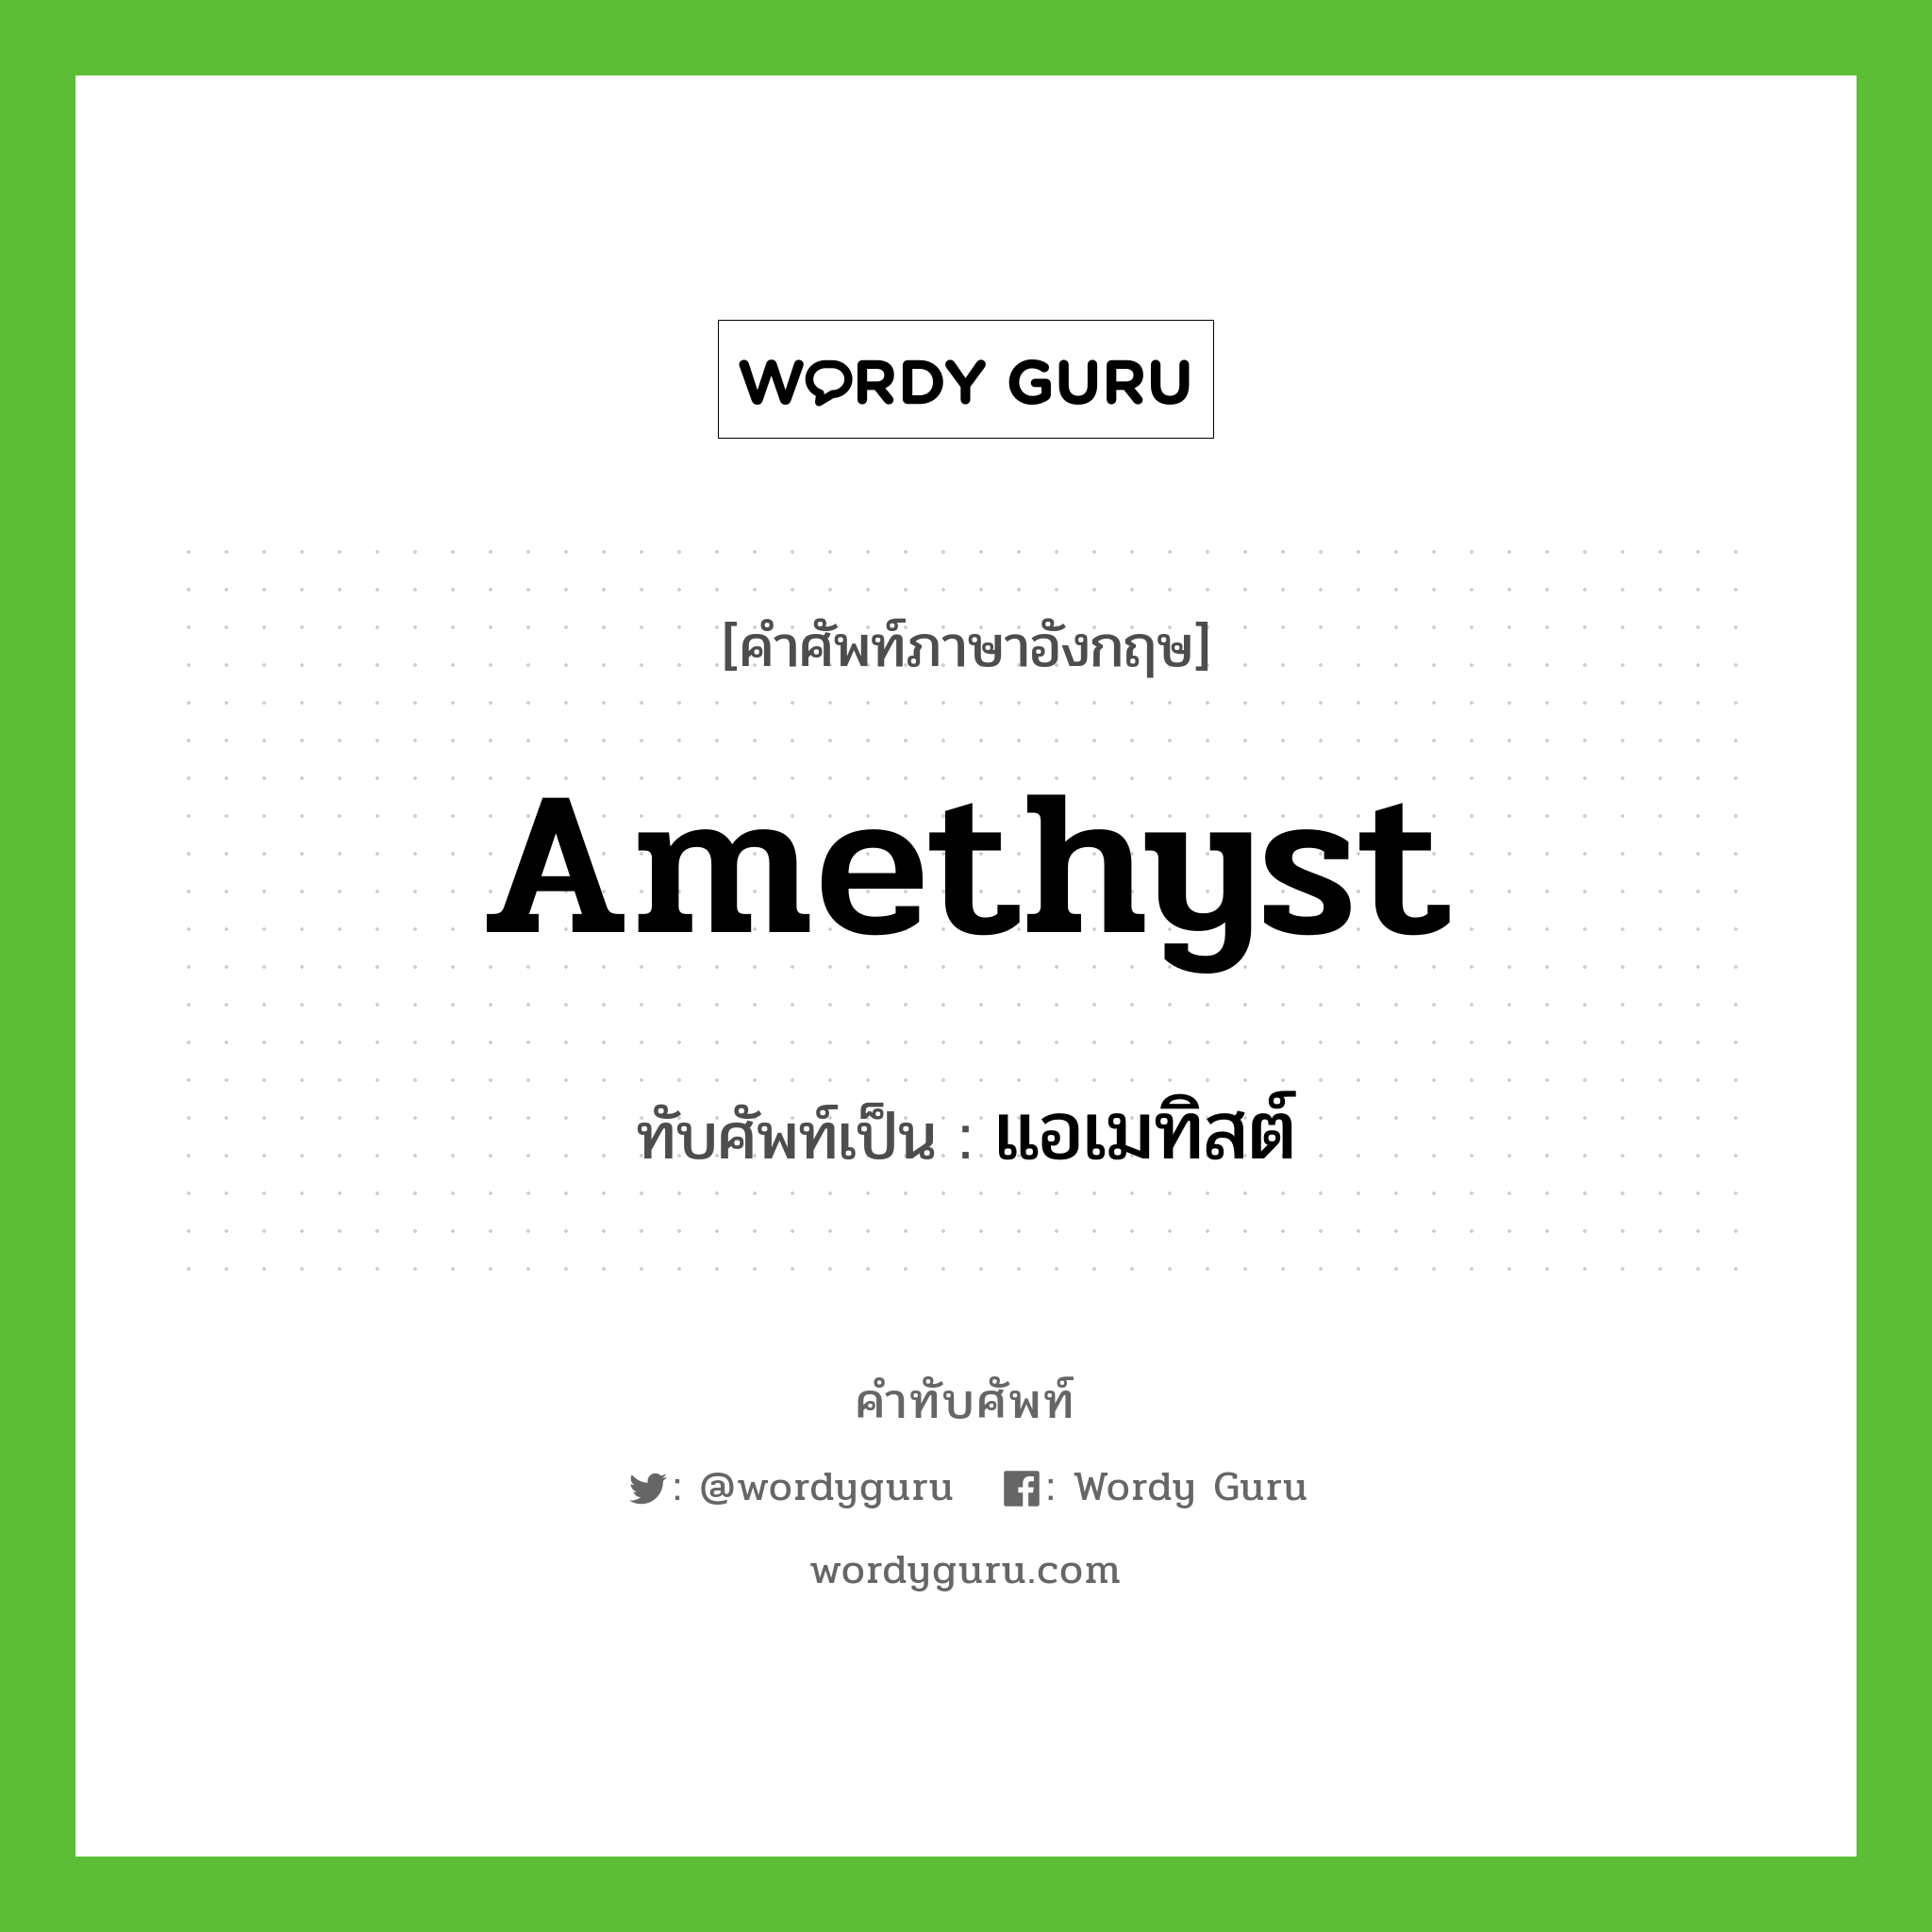 amethyst เขียนเป็นคำไทยว่าอะไร?, คำศัพท์ภาษาอังกฤษ amethyst ทับศัพท์เป็น แอเมทิสต์